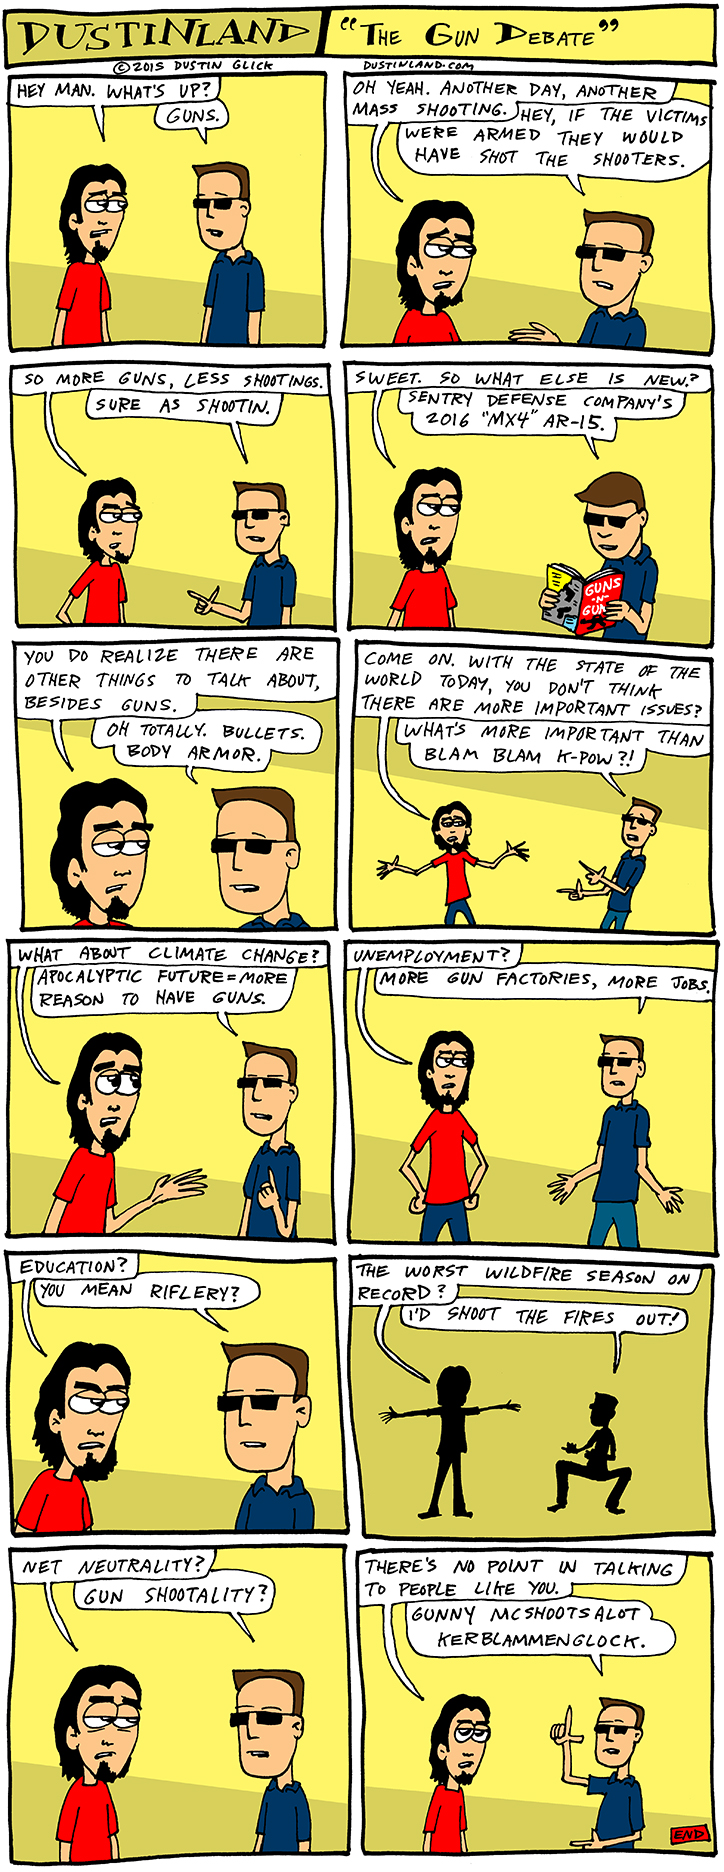 dustinland gun debate comic